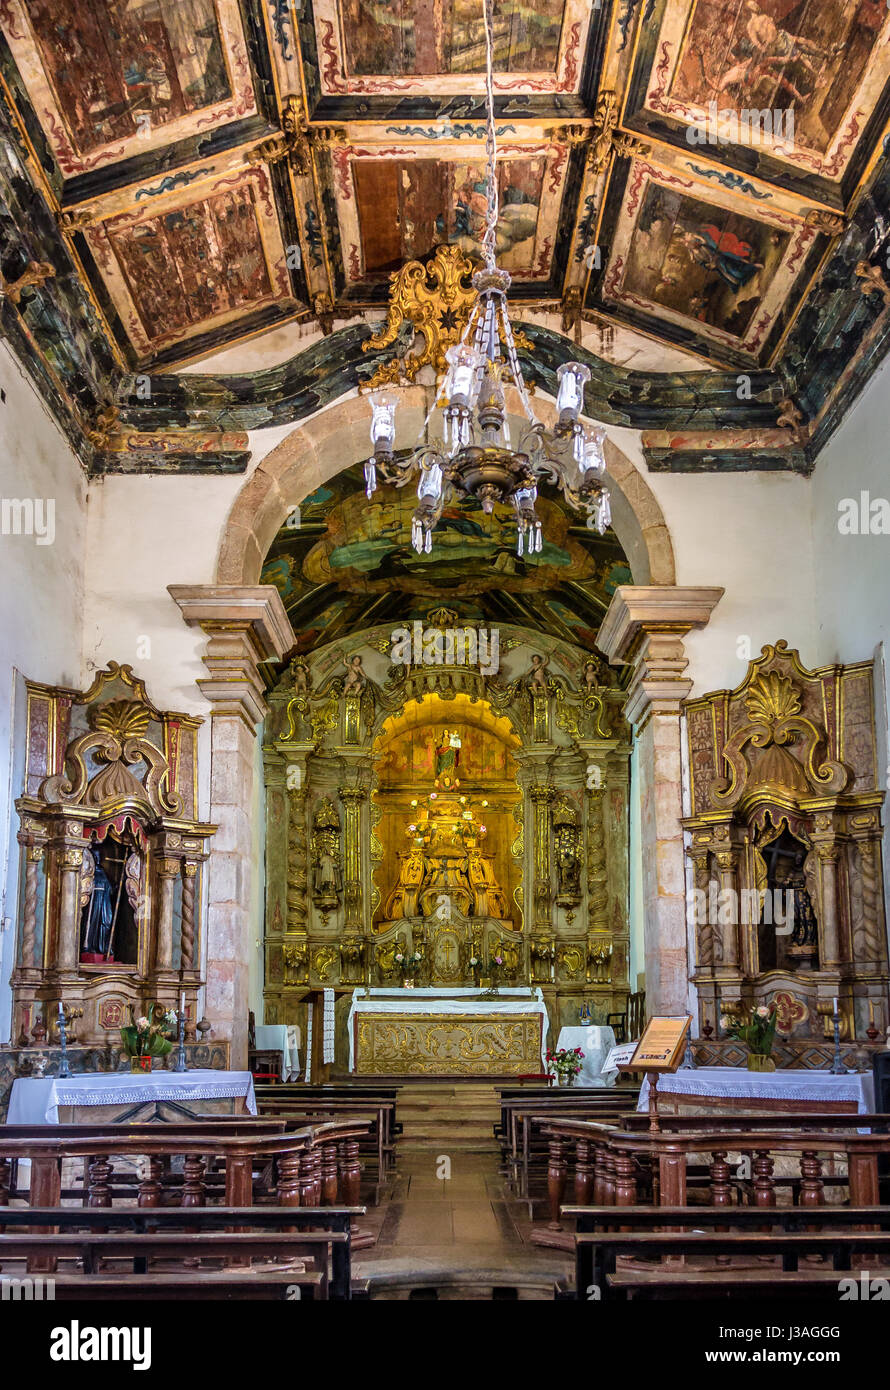 Interieur von Nossa Senhora Rosario Church - Tiradentes, Minas Gerais, Brasilien Stockfoto